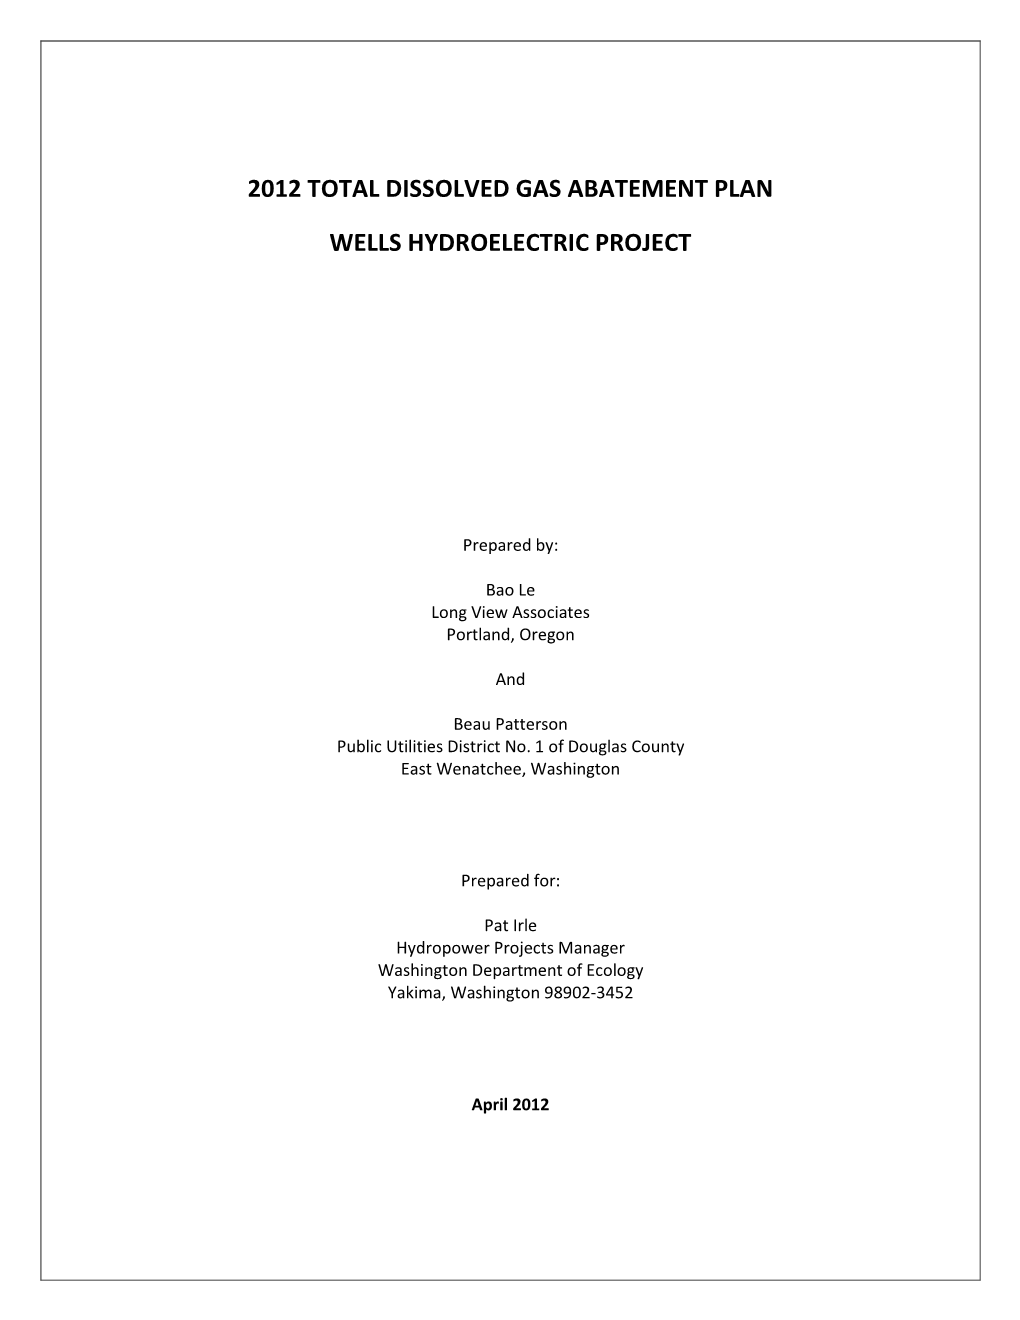 2012 Total Dissolved Gas Abatement Plan Wells